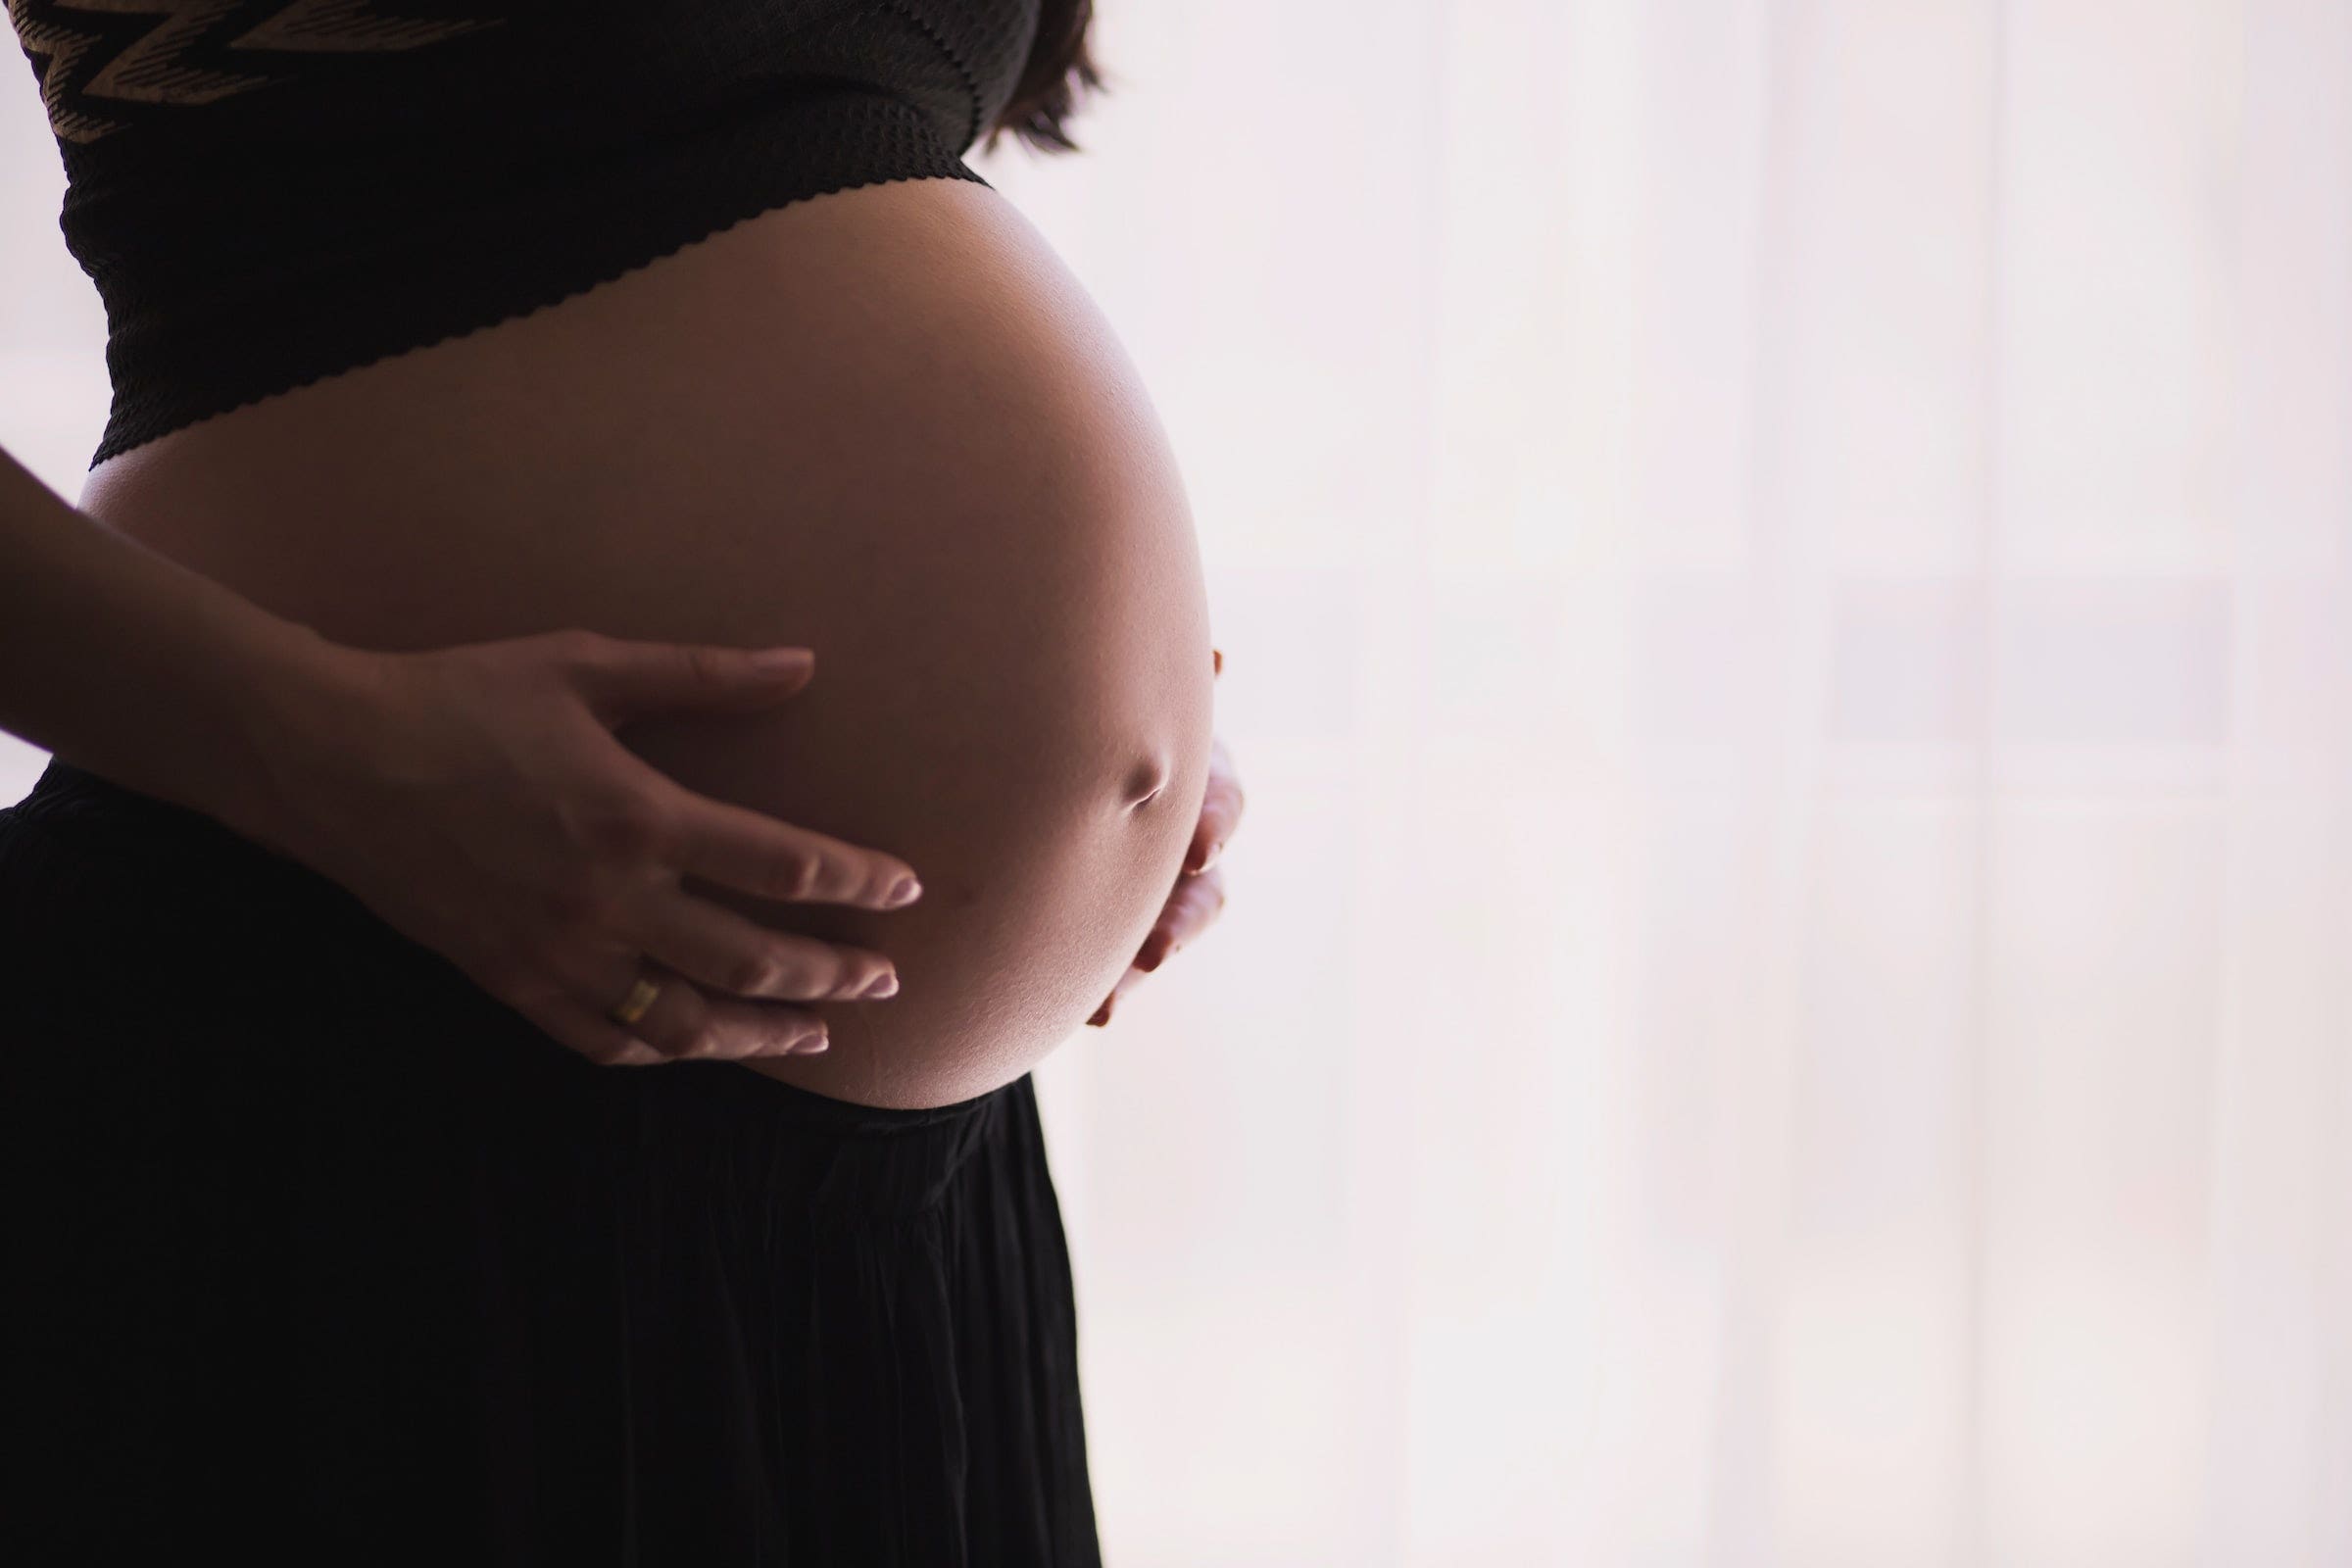 Oklahoma Suing Pregnant Women For Consuming Medical Marijuana